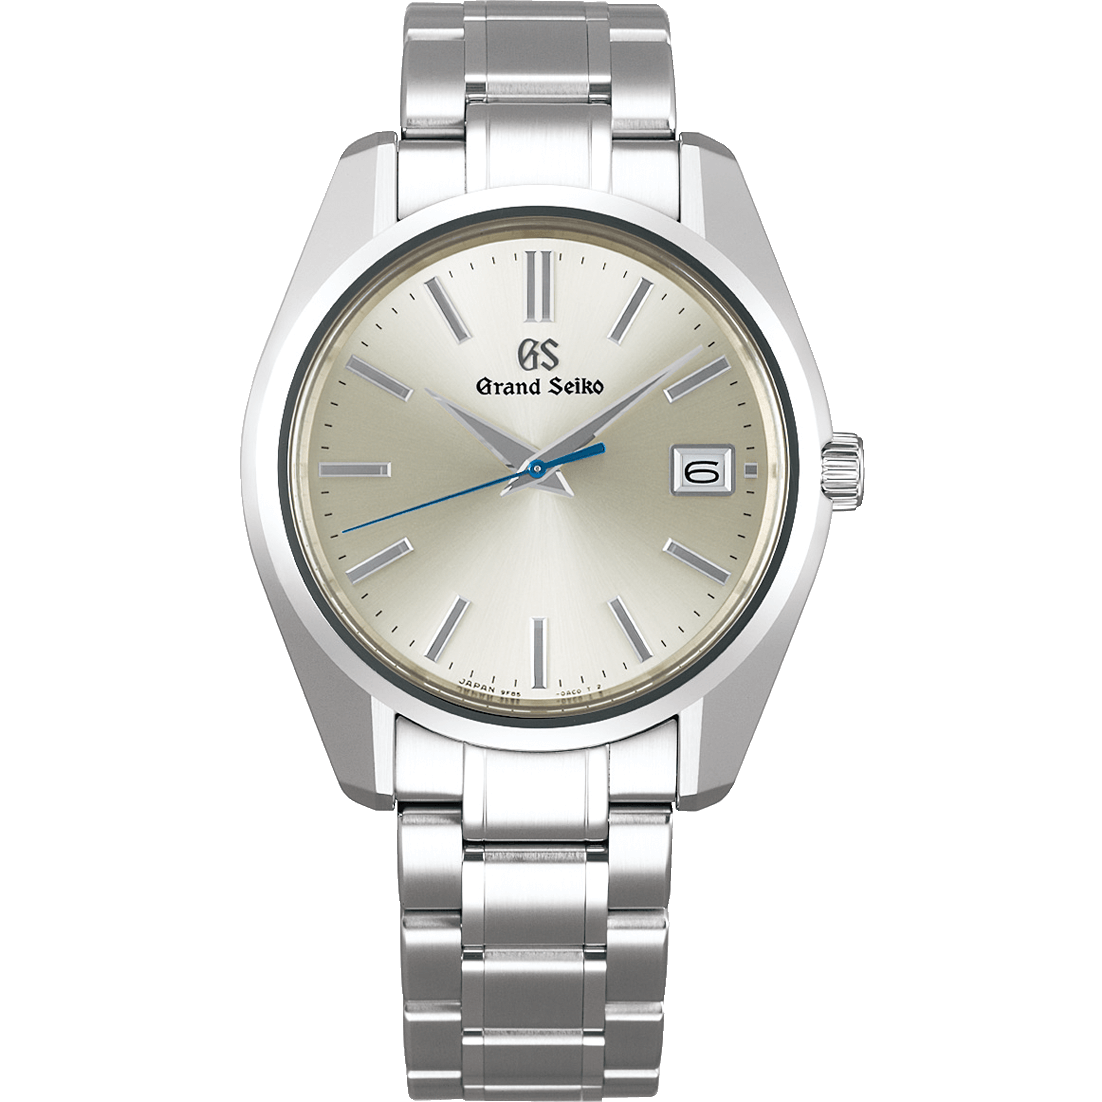 Grand Seiko SBGP001 quartz, champagne dial, stainless steel, men's watches